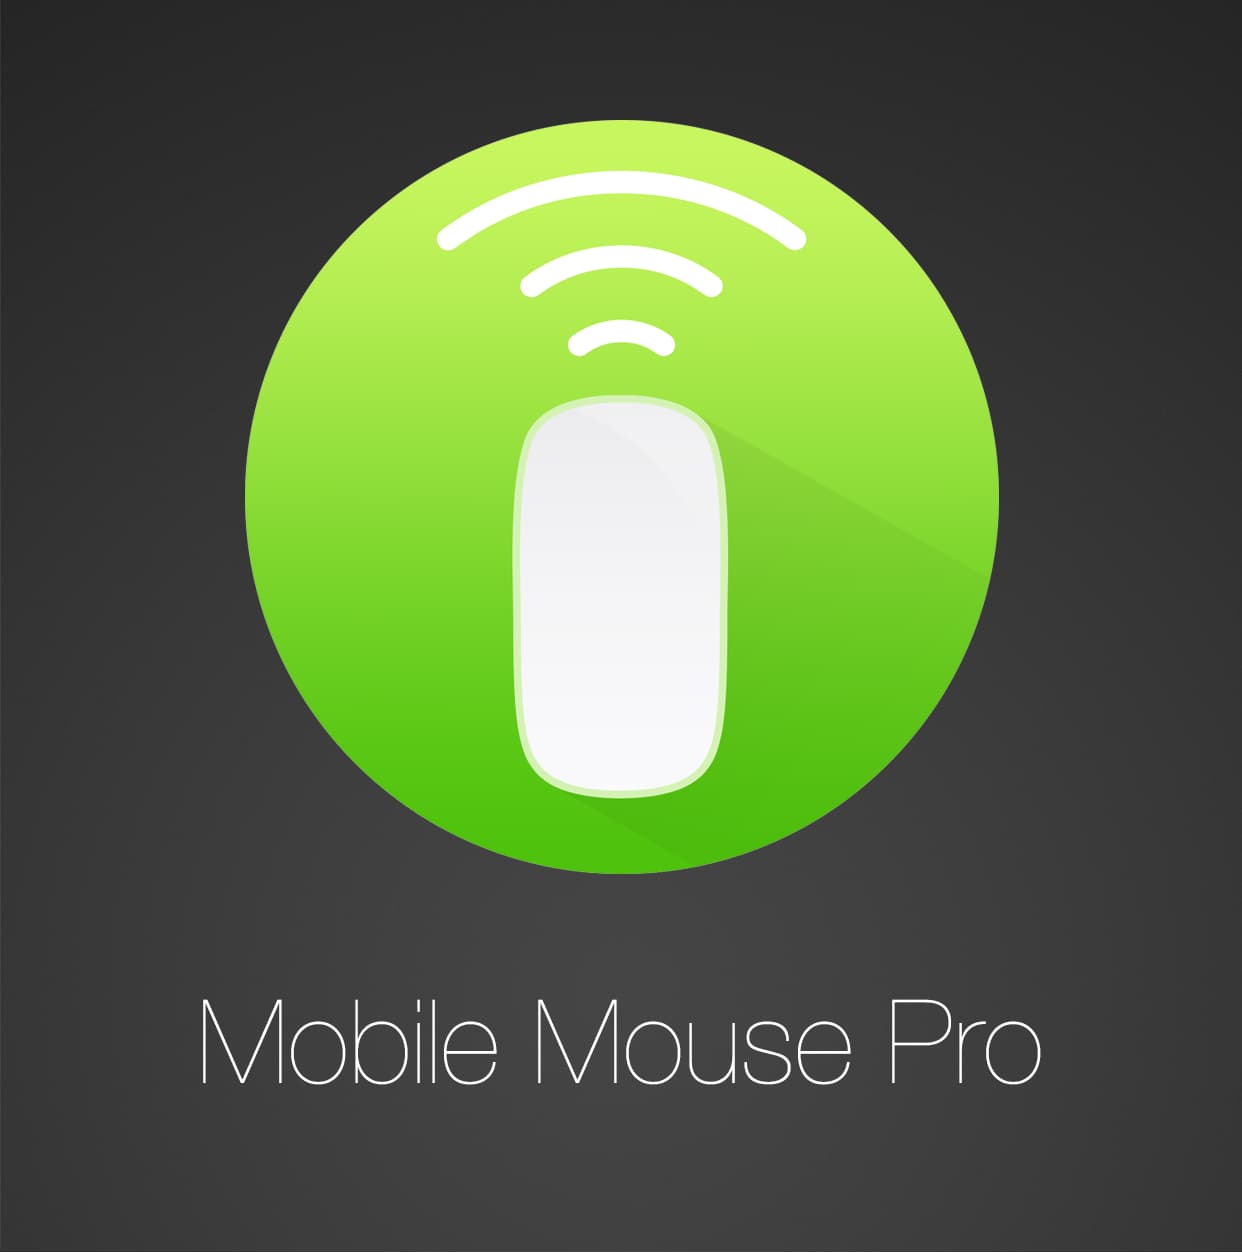 Mobile Mouse Pro app icon